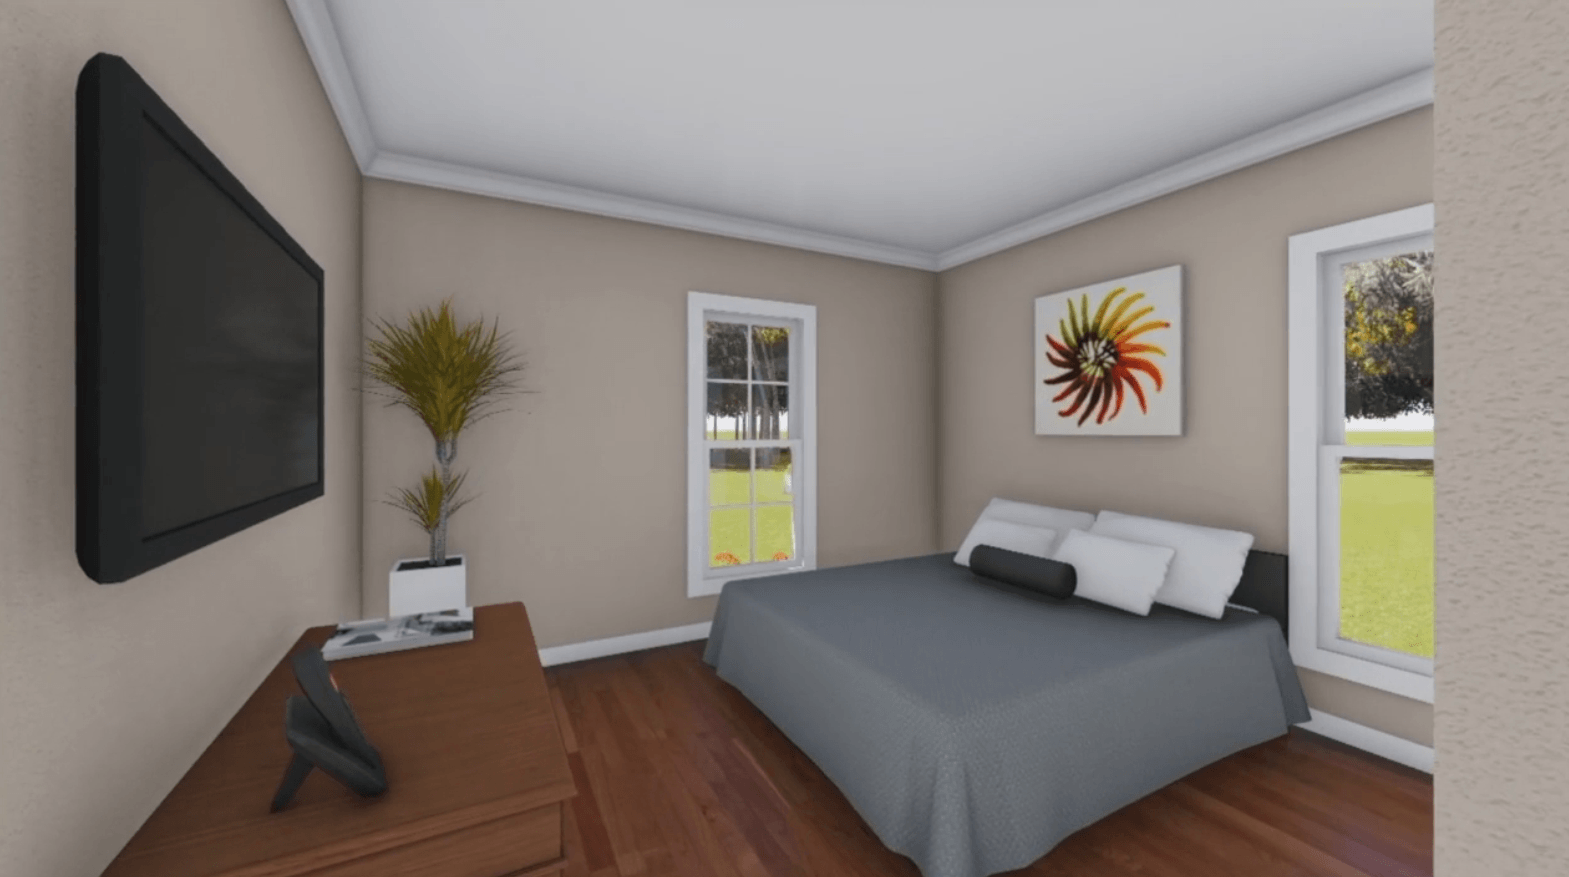 HPG-1888B-1 bedroom in home plans